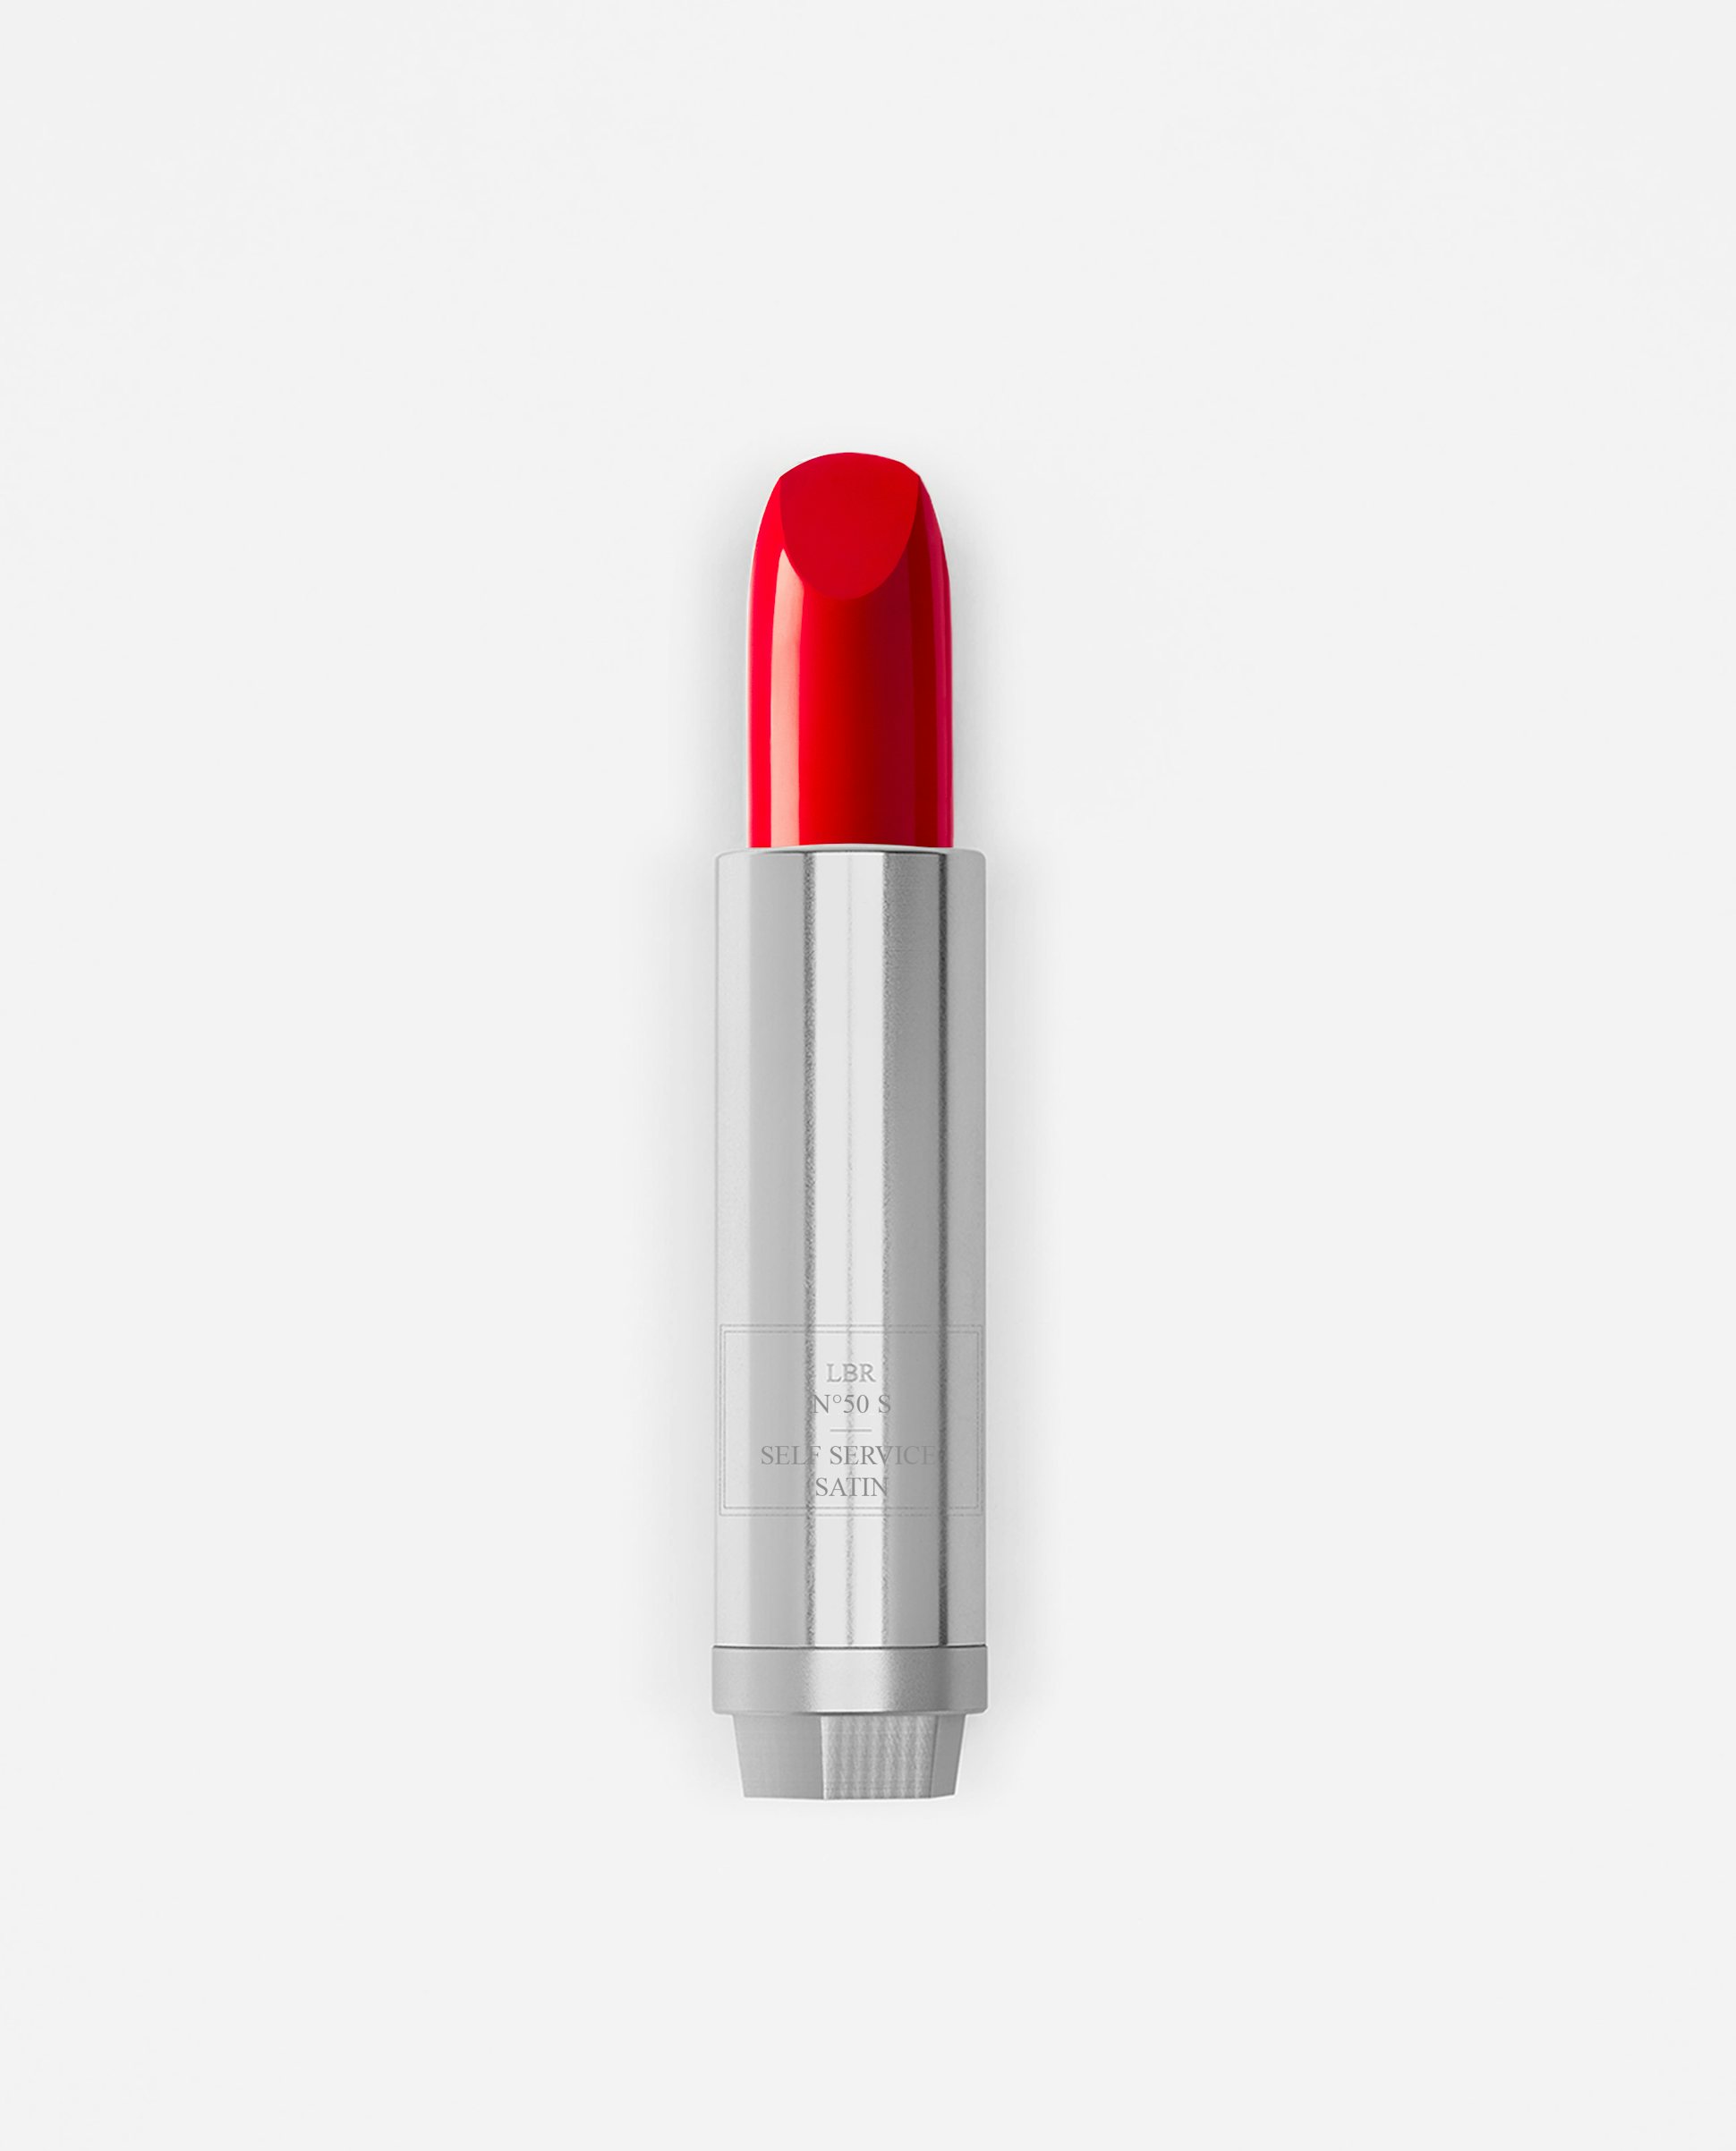 La bouche rouge Le Rouge Self Service Satin lipstick in metal refill